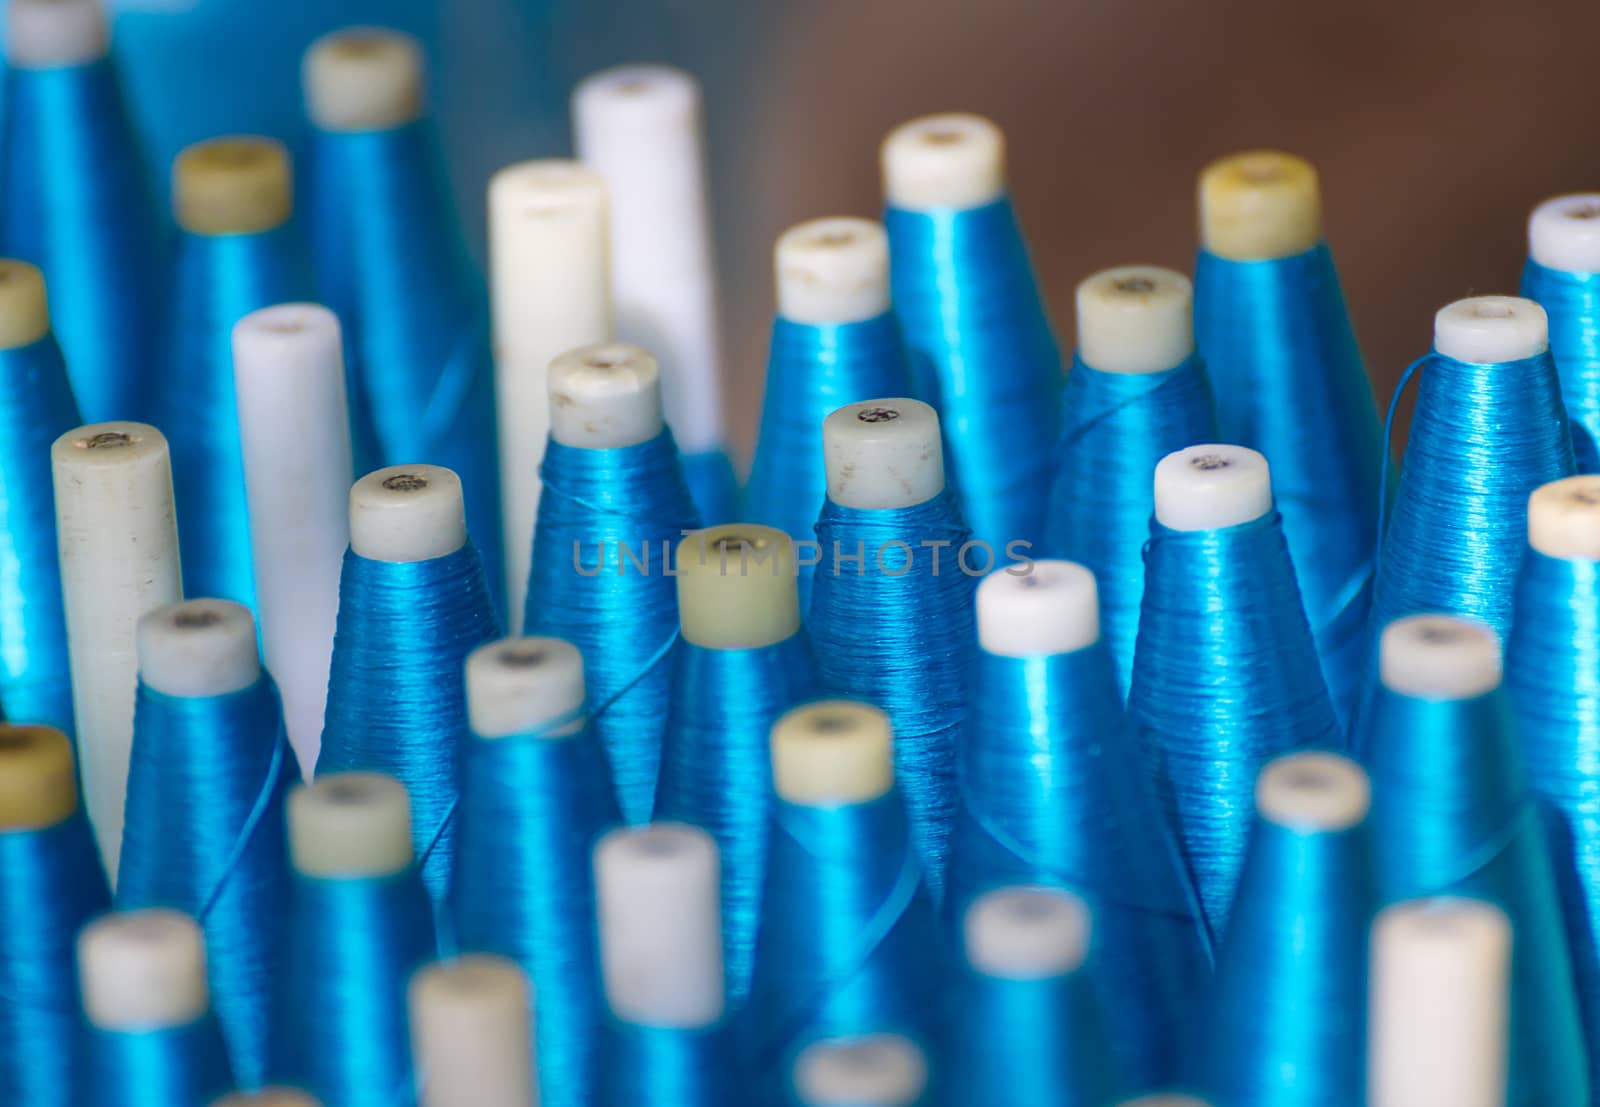 Bobbin for weaving silk,Spool of blue silk thread in row